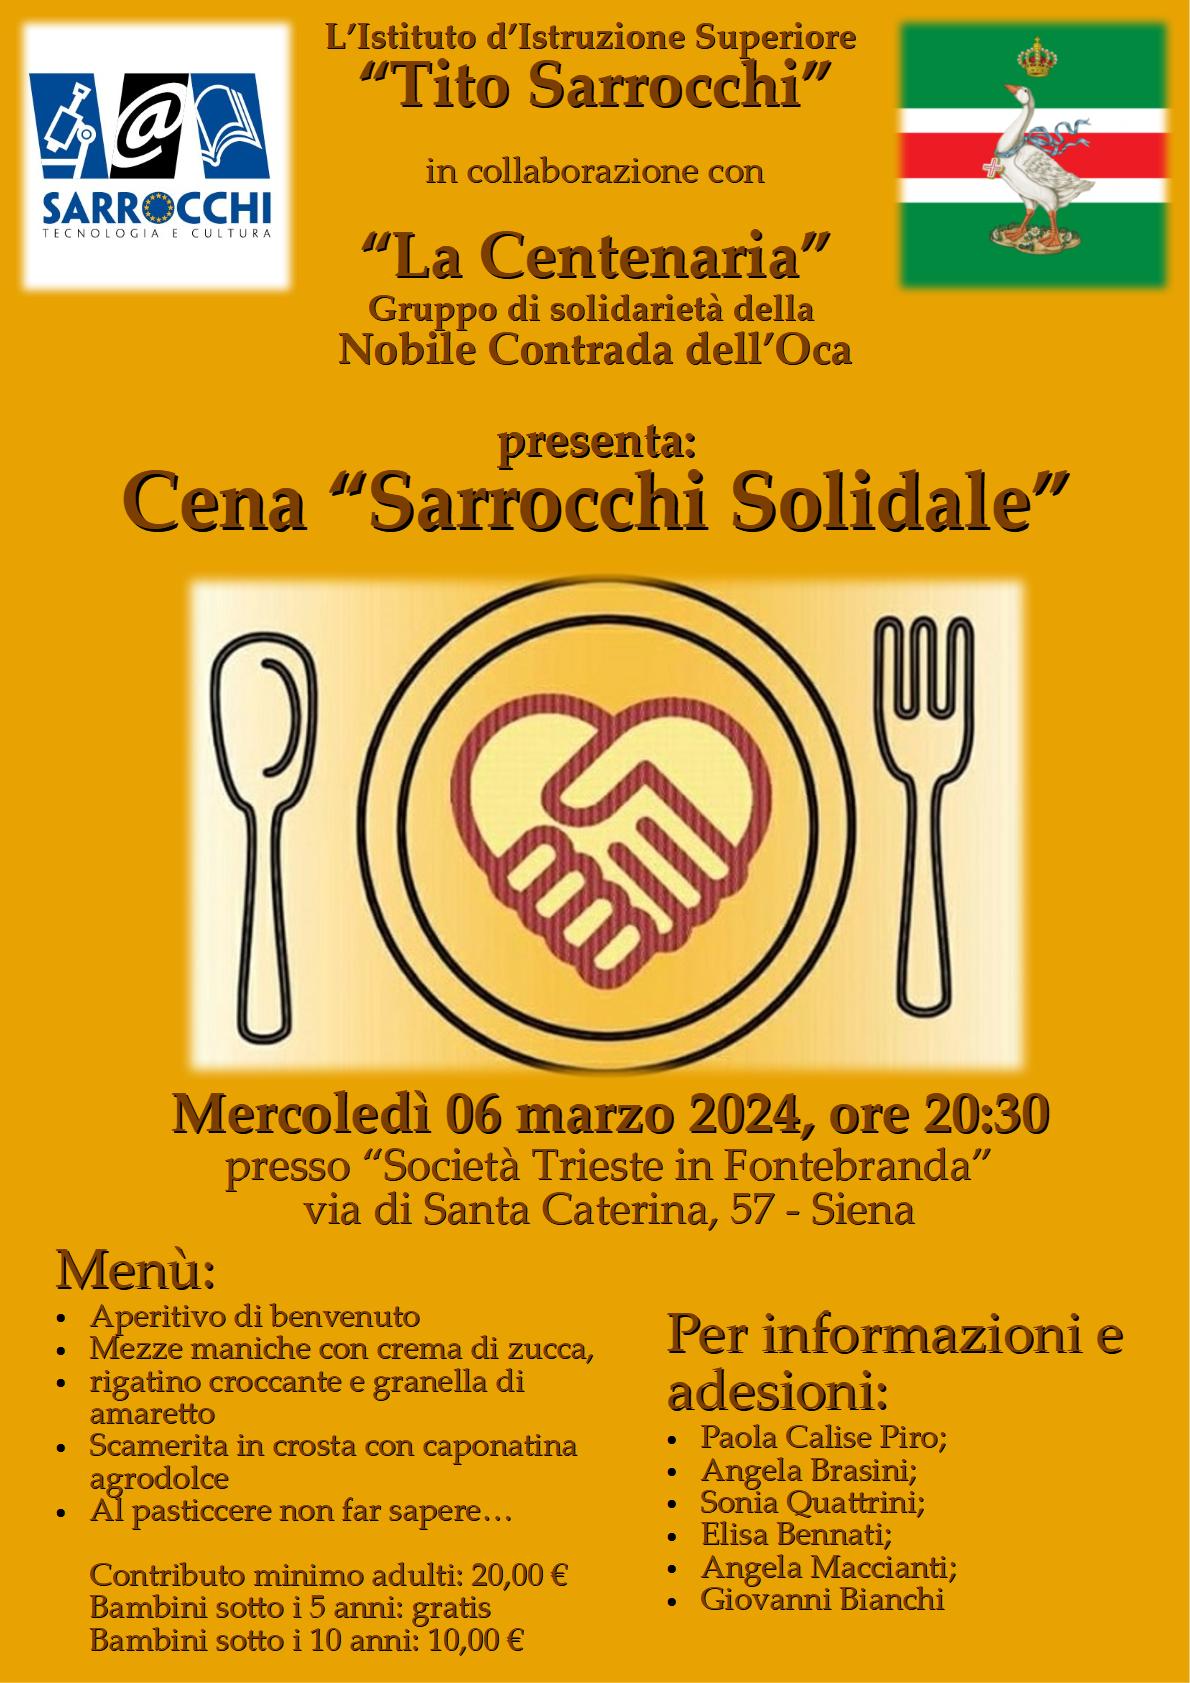 Cena Sarrocchi Solidale mercoledì 6 marzo 2024